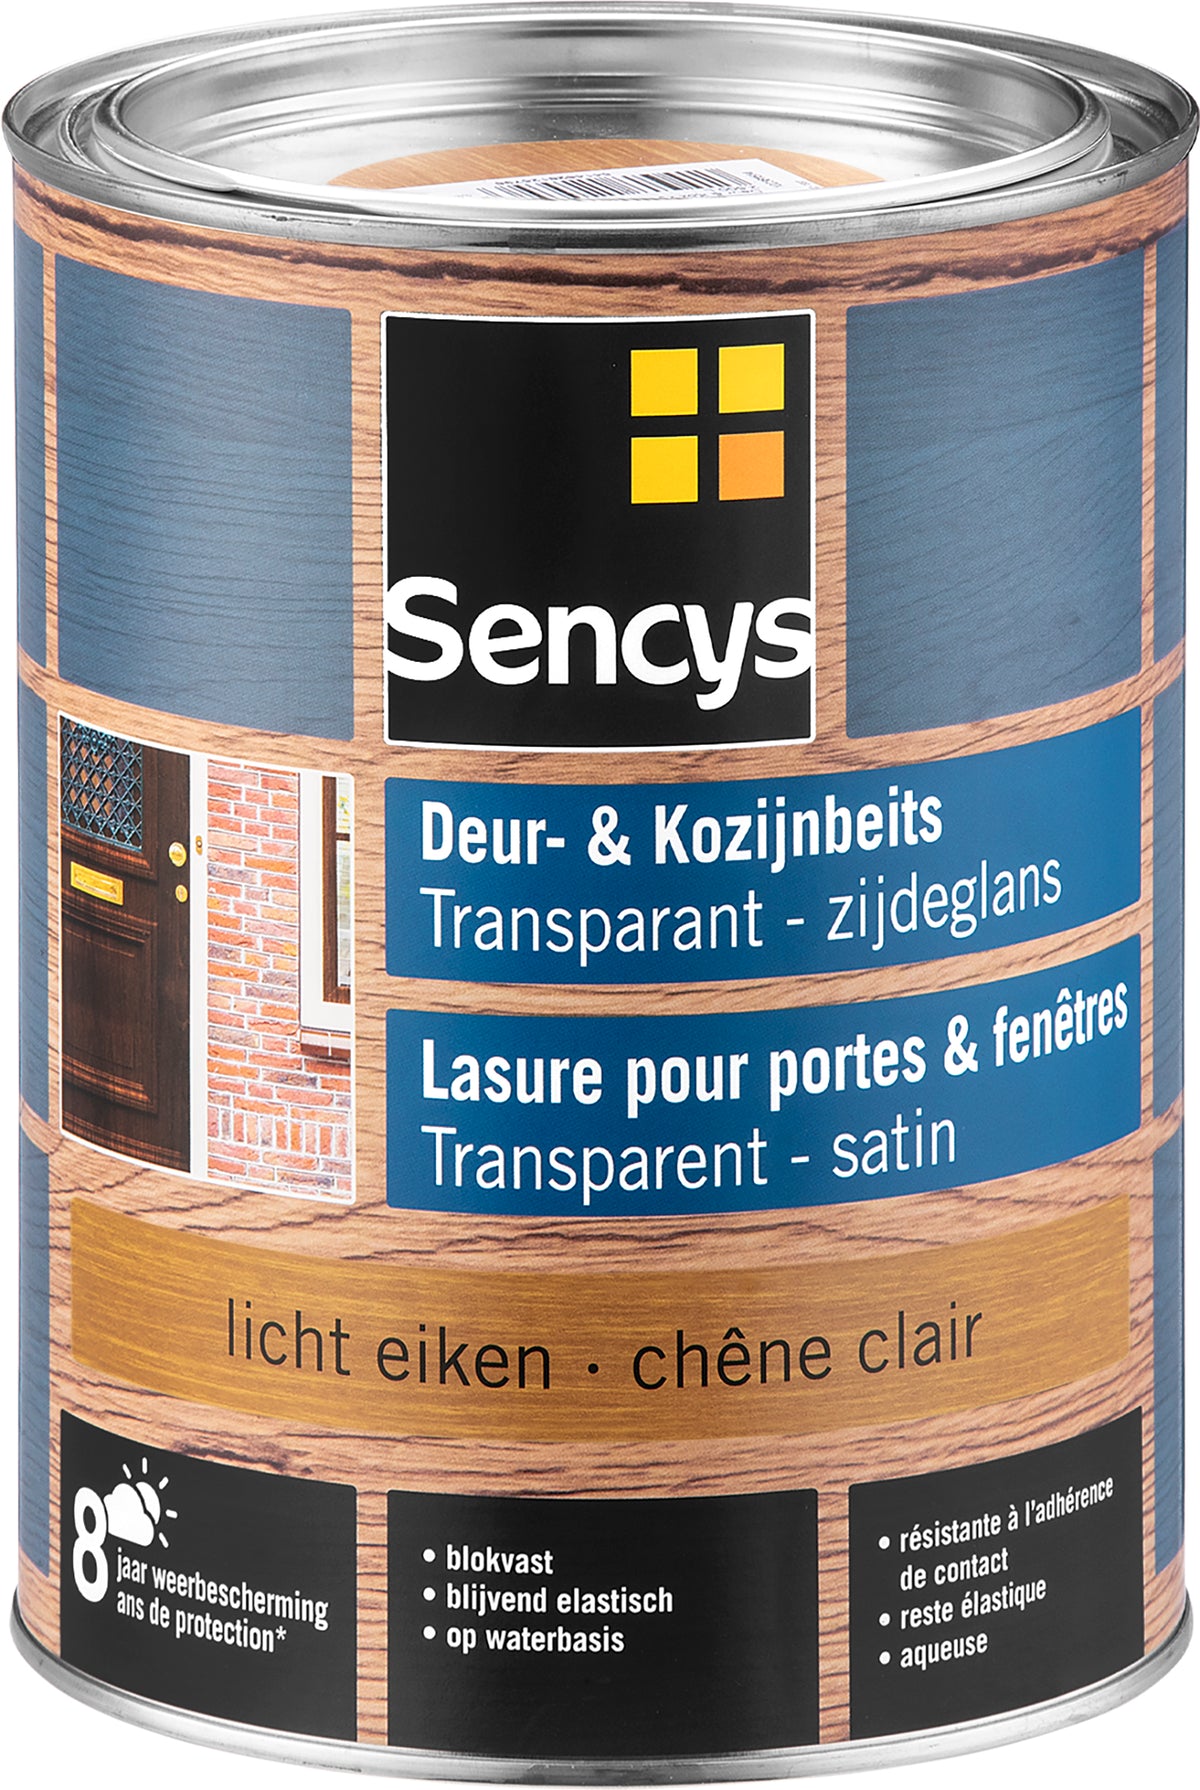 Sencys beits ramen en deuren semi-transparant zijdeglans lichte eiken 2,5L